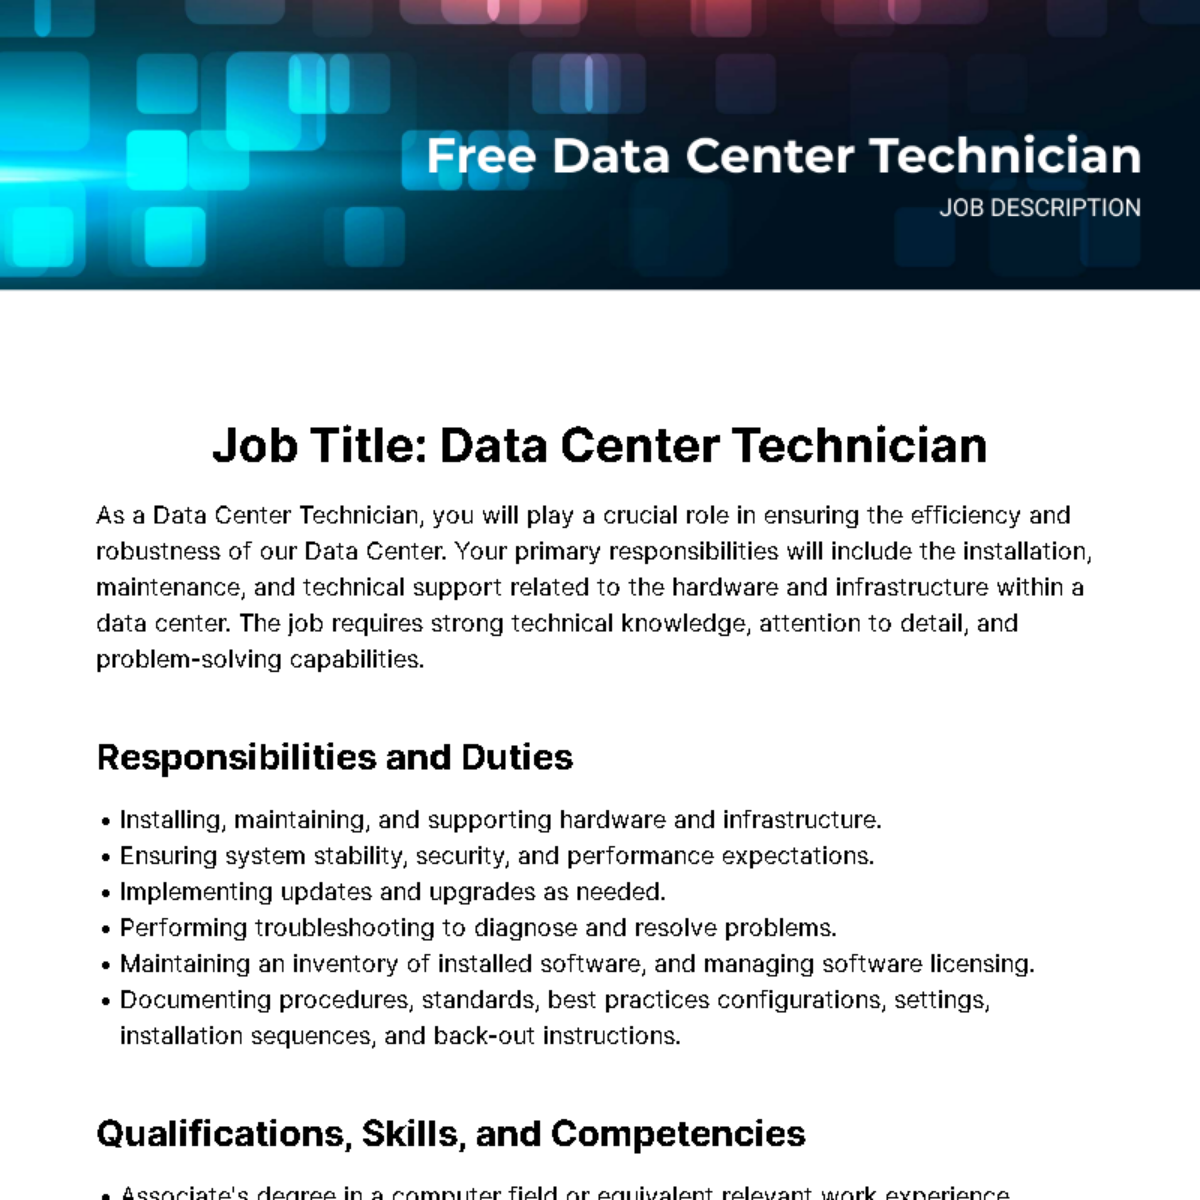 Free Data Center Technician Job Description Template